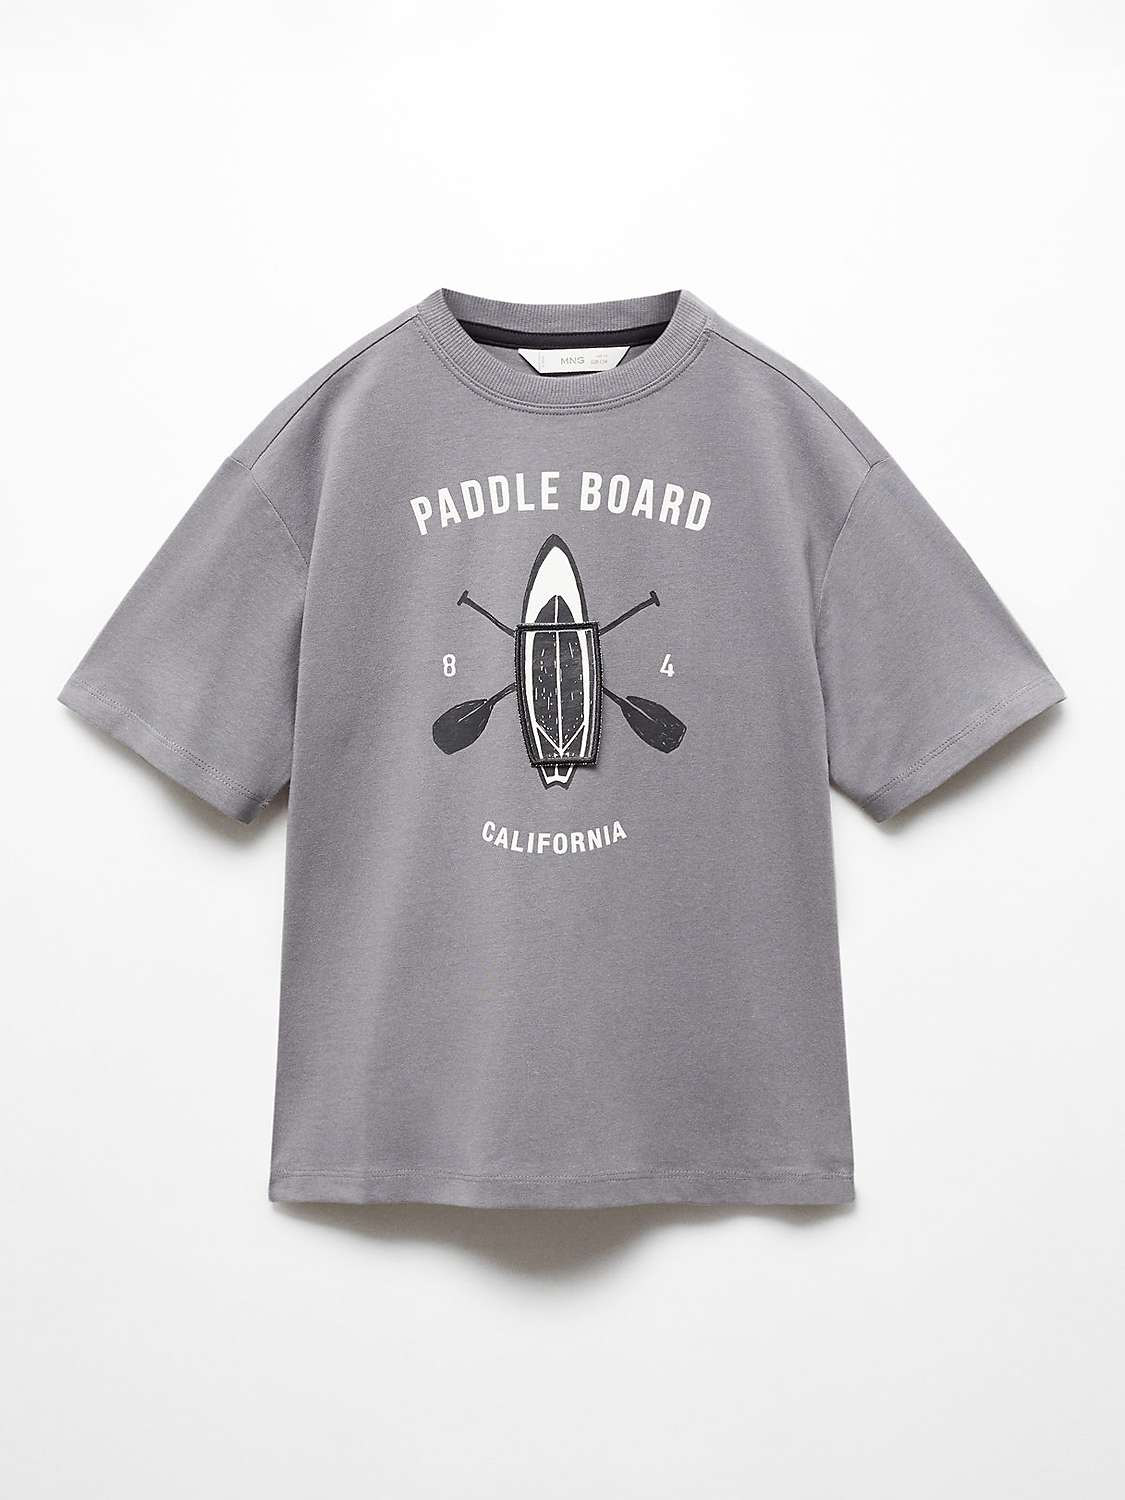 Buy Mango Kids' Paddle Board T-Shirt, Charcoal Online at johnlewis.com